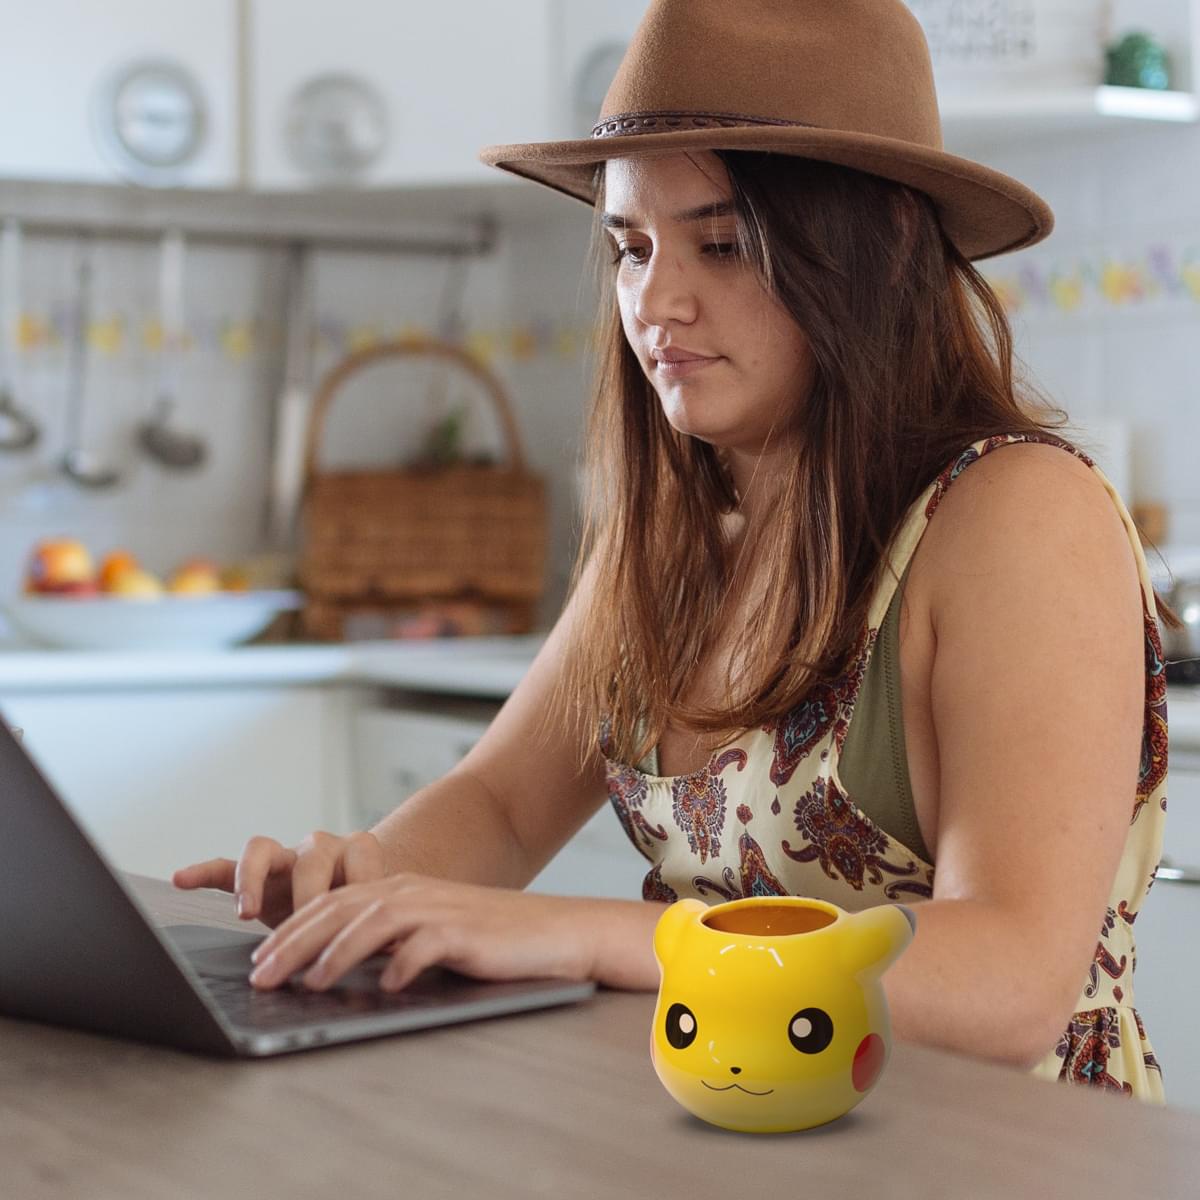 Collectible Pokemon Pikachu 16oz 3D Sculpted Mug